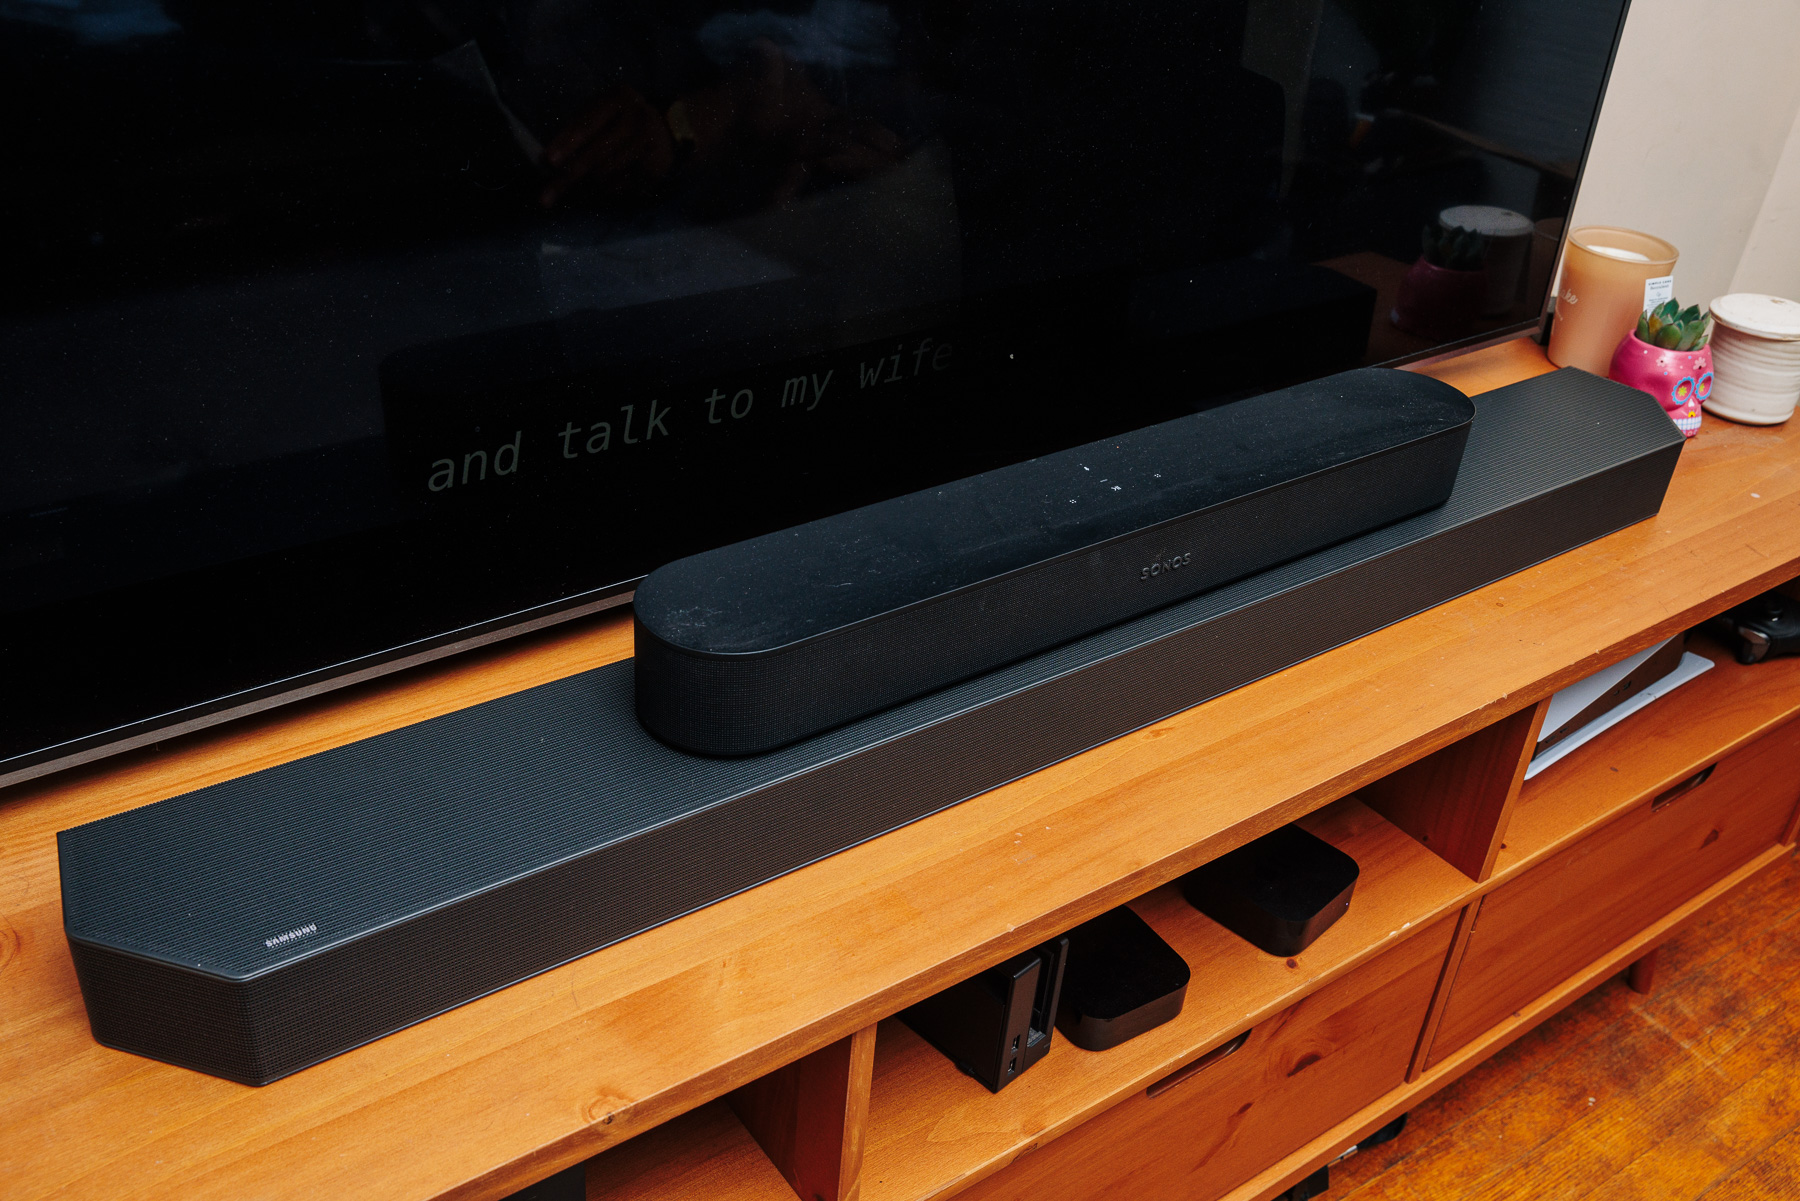 Samsung Q900C soundbar with a Sonos Beam soundbar sitting on top of it in front of a TV